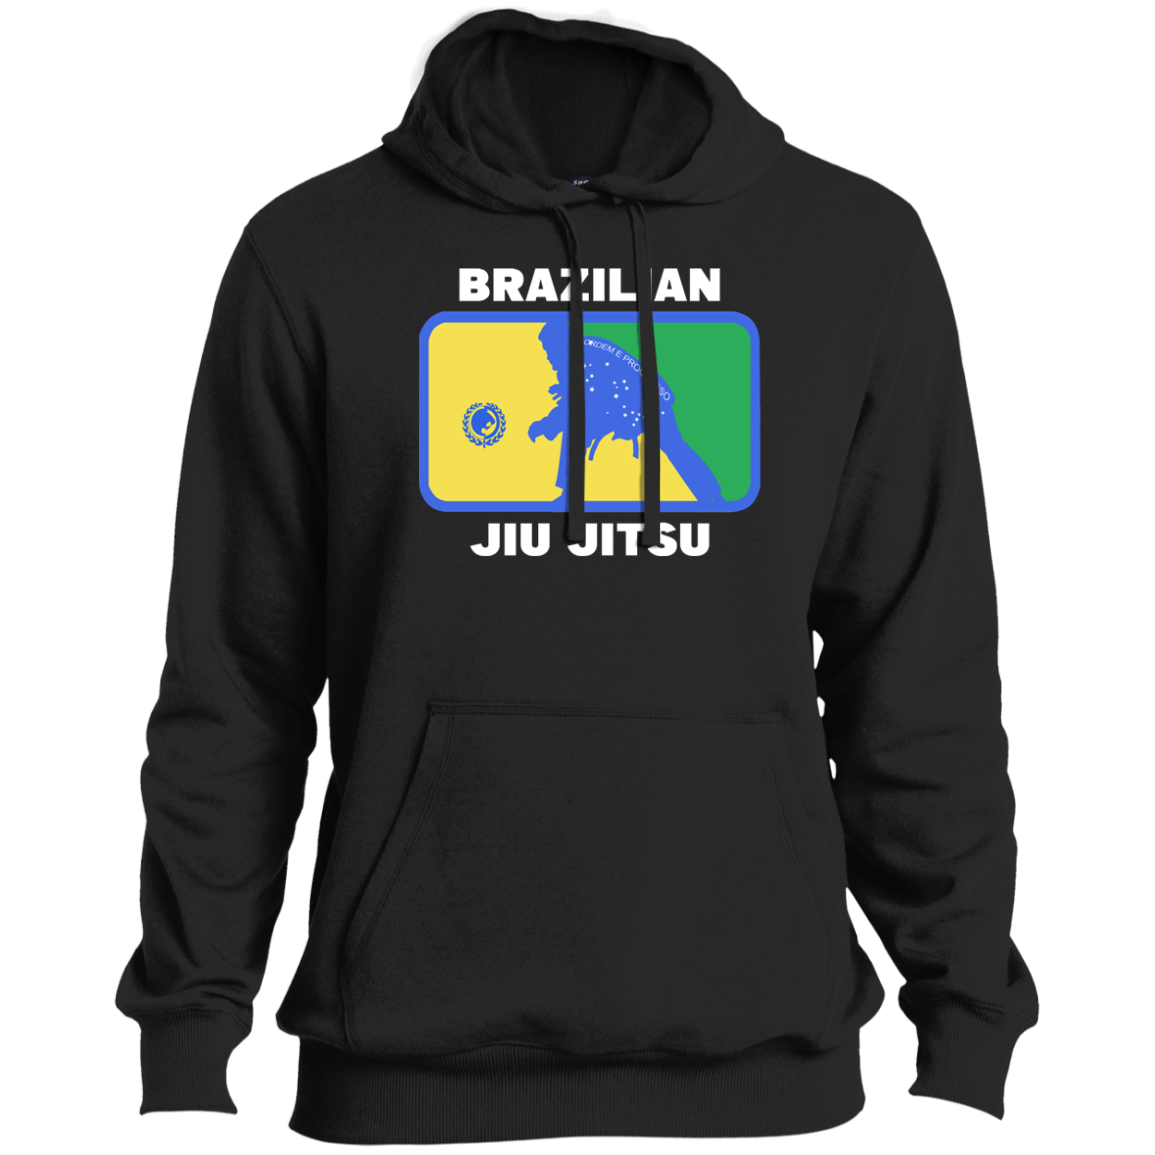 Artichoke Fight Gear Custom Design #5. BJJ MLB Brazil Flag Colors. Parody v2. Ultra Soft Hoodie